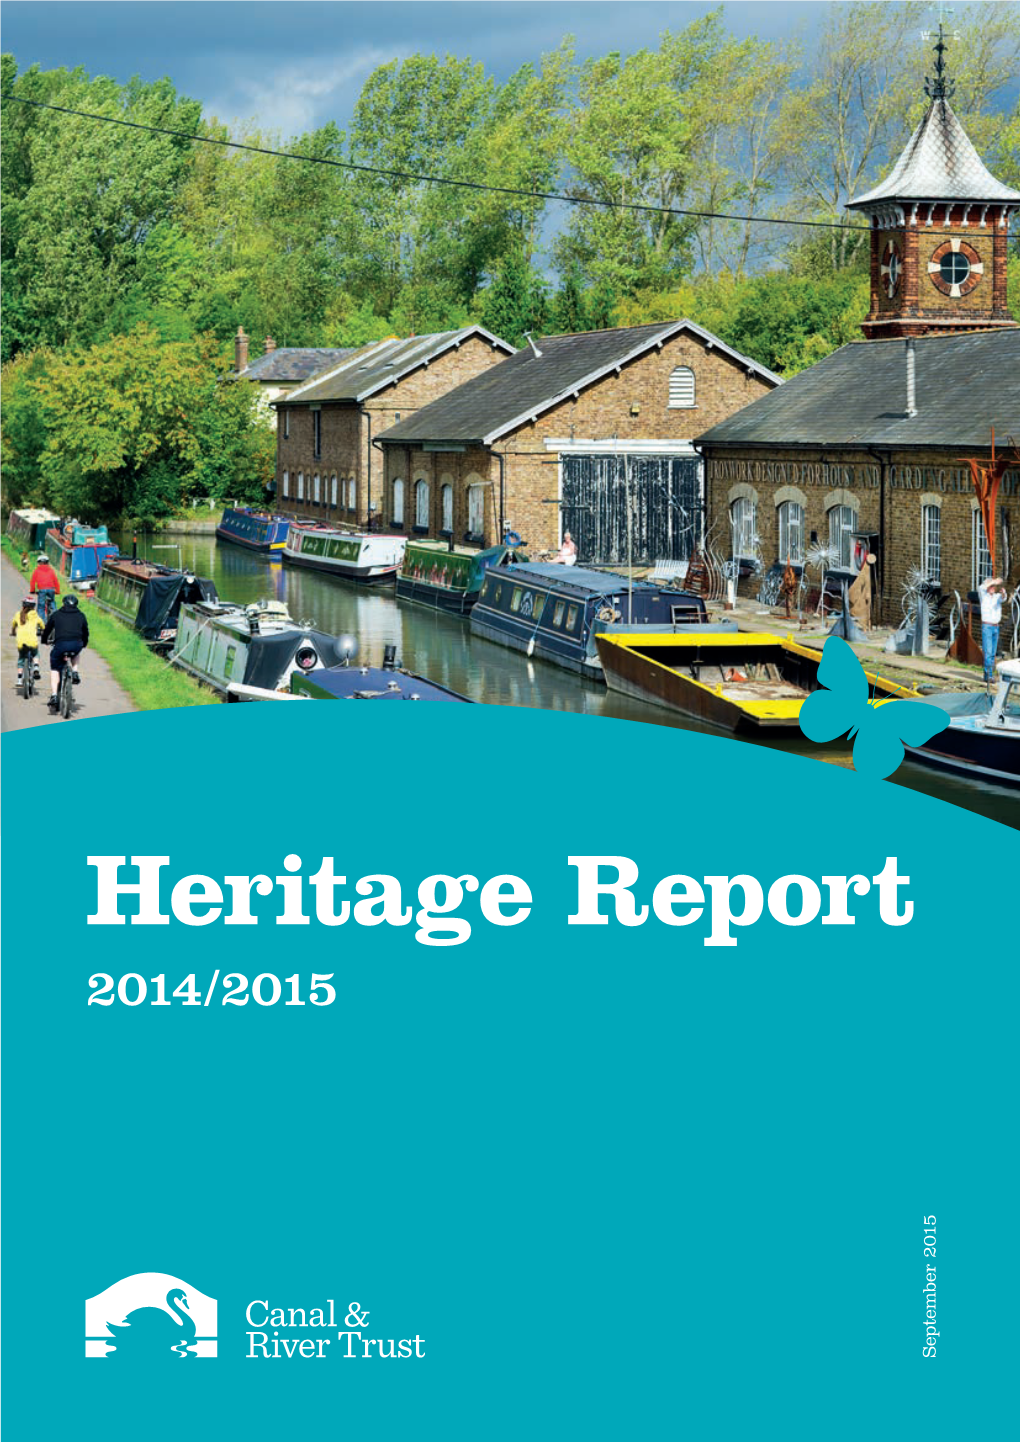 Heritage Report